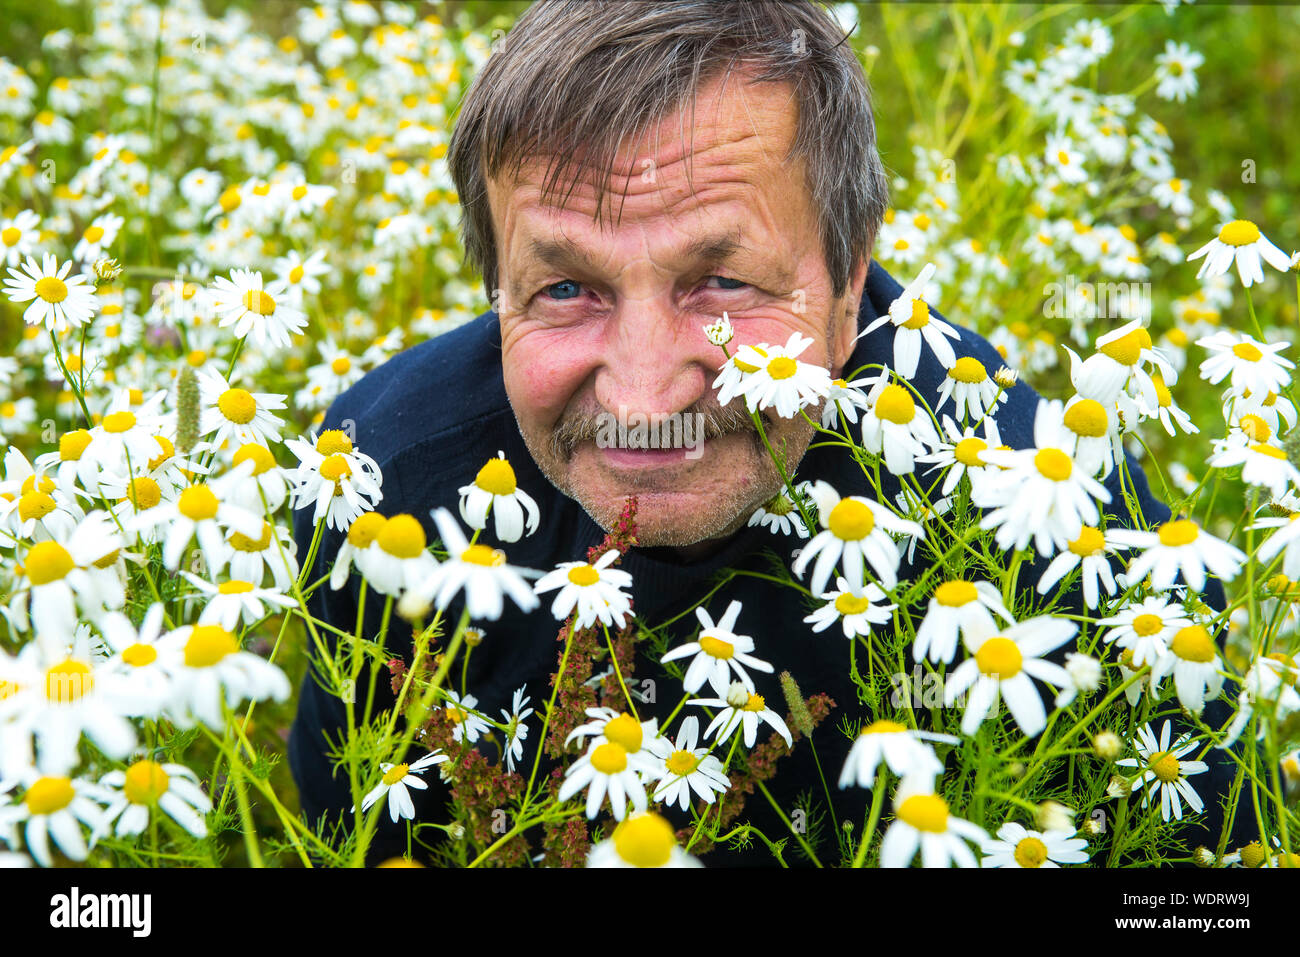 Portrait Of Senior Man Amidst Flowering Plants Stock Photo